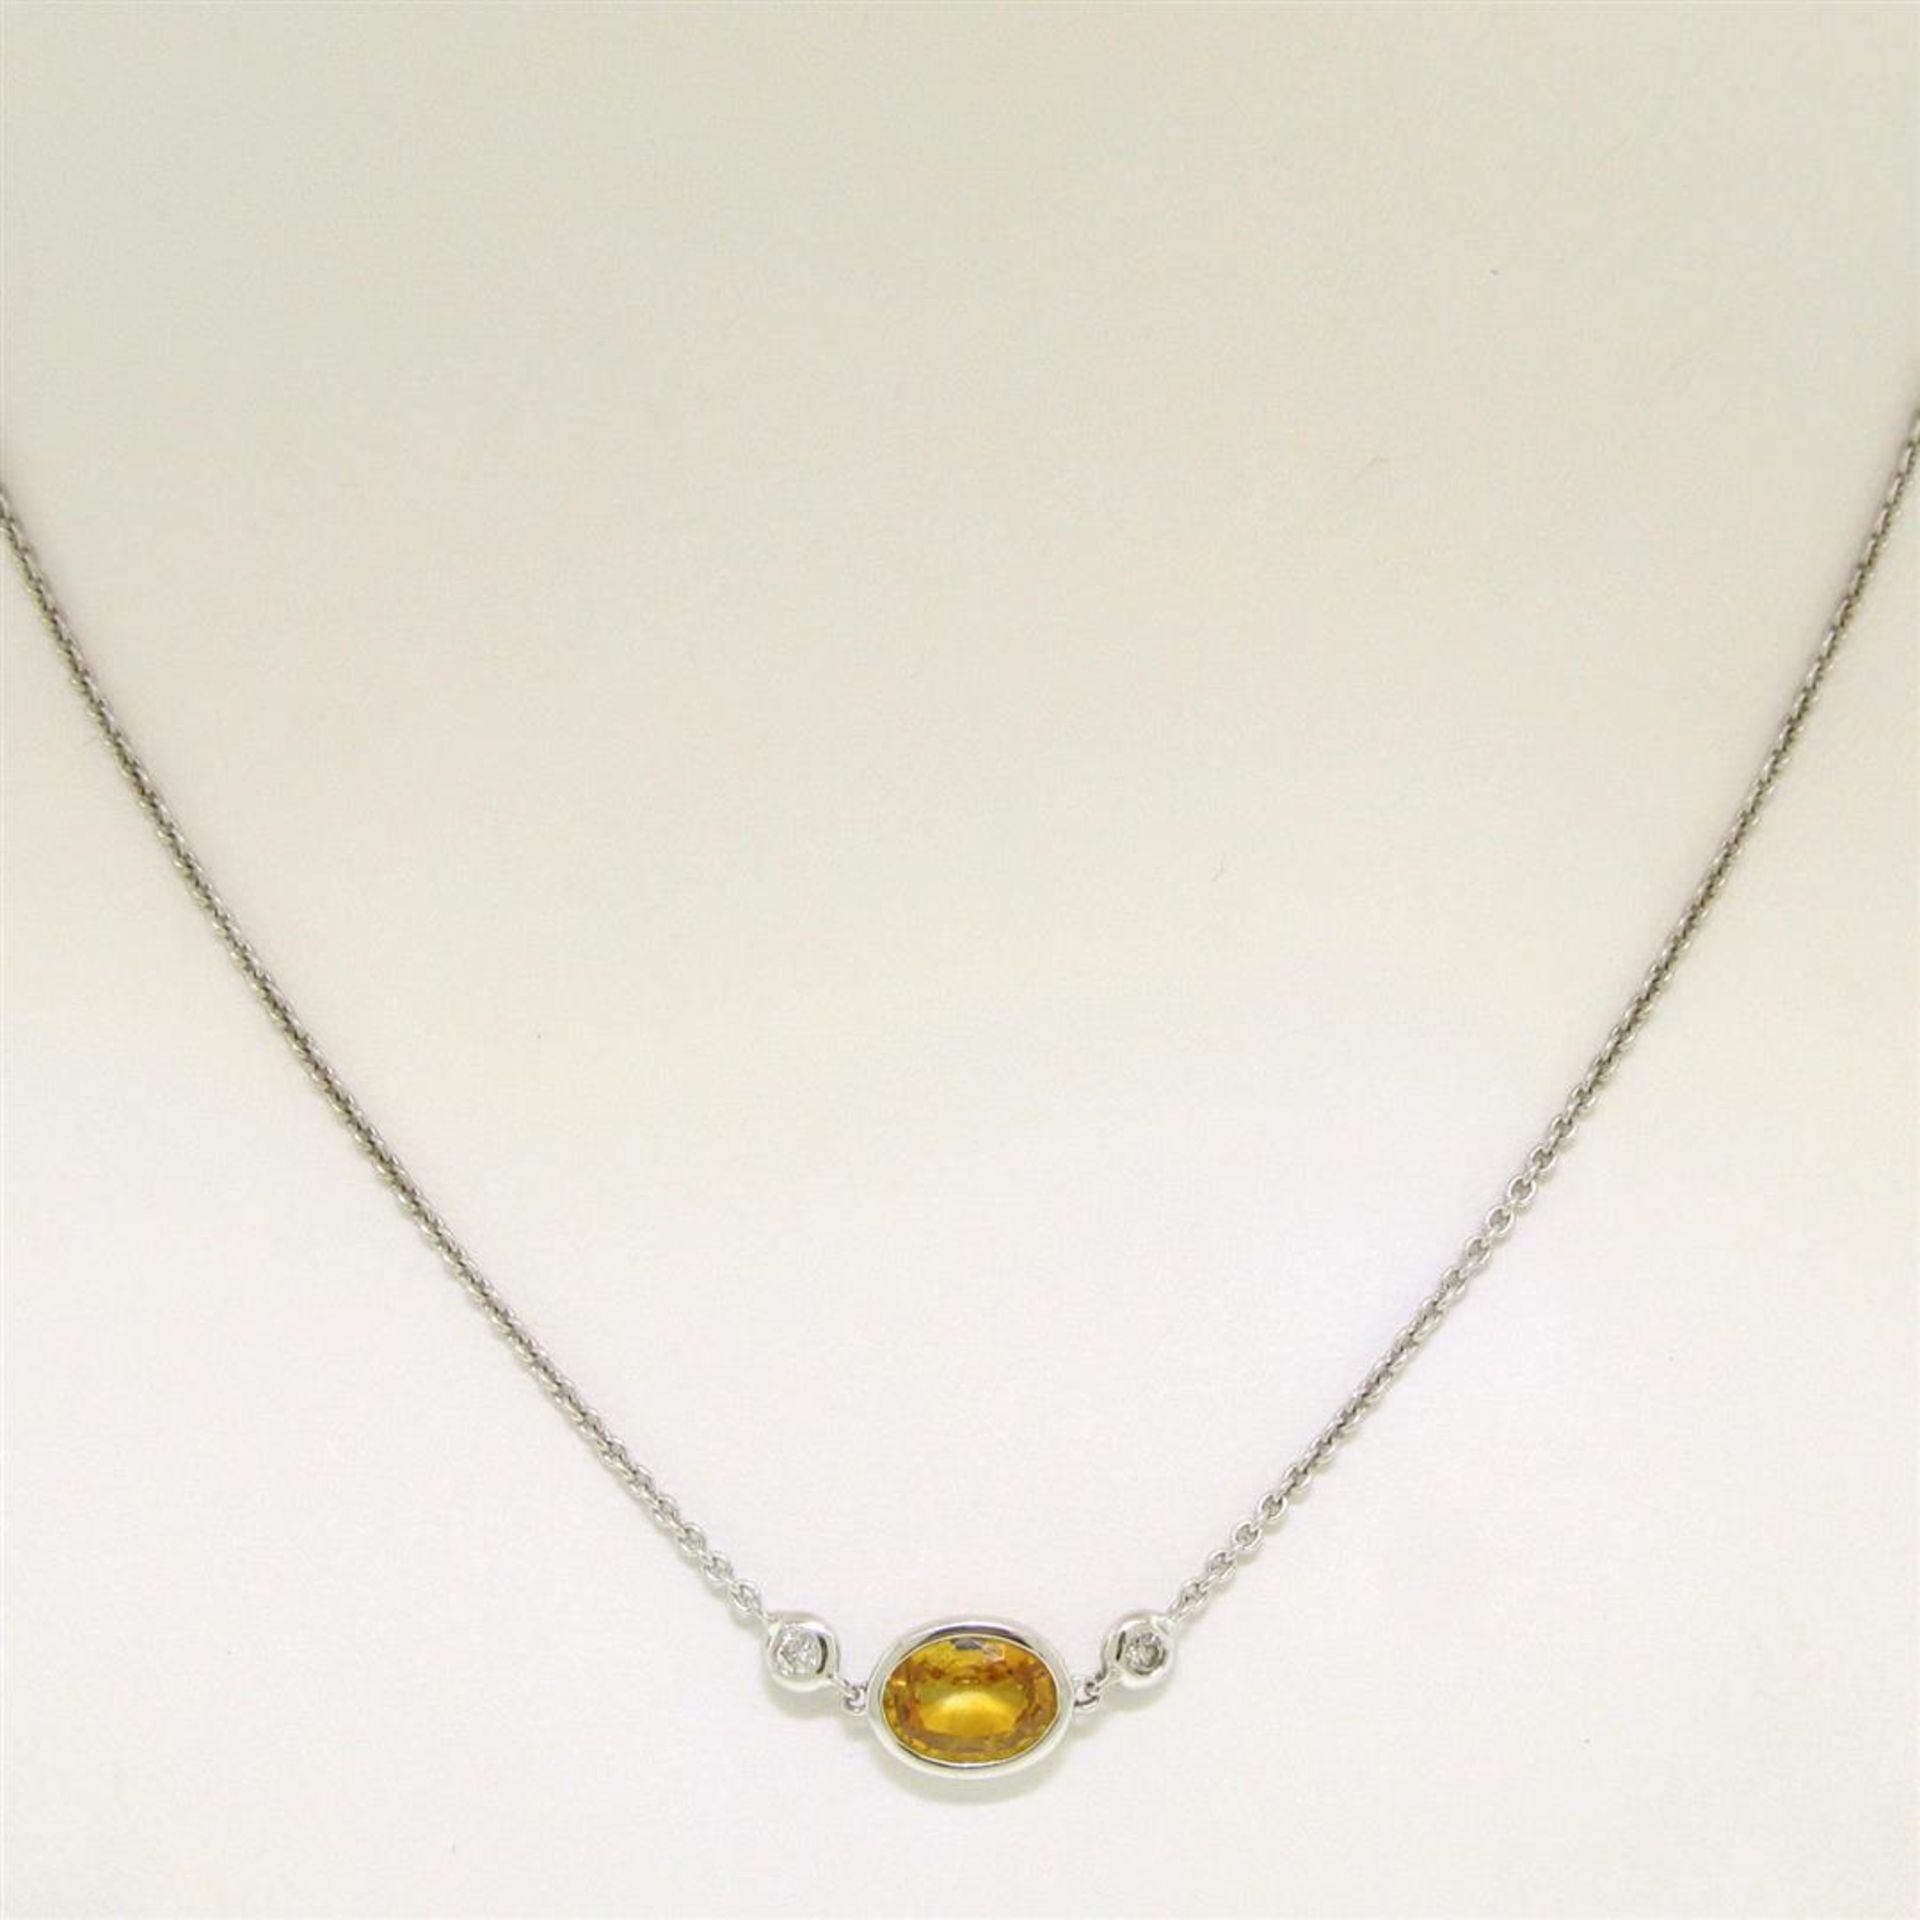 18K White Gold 18" 1.25 ctw GIA Yellow Sapphire & Diamond Pendant Necklace - Image 4 of 8